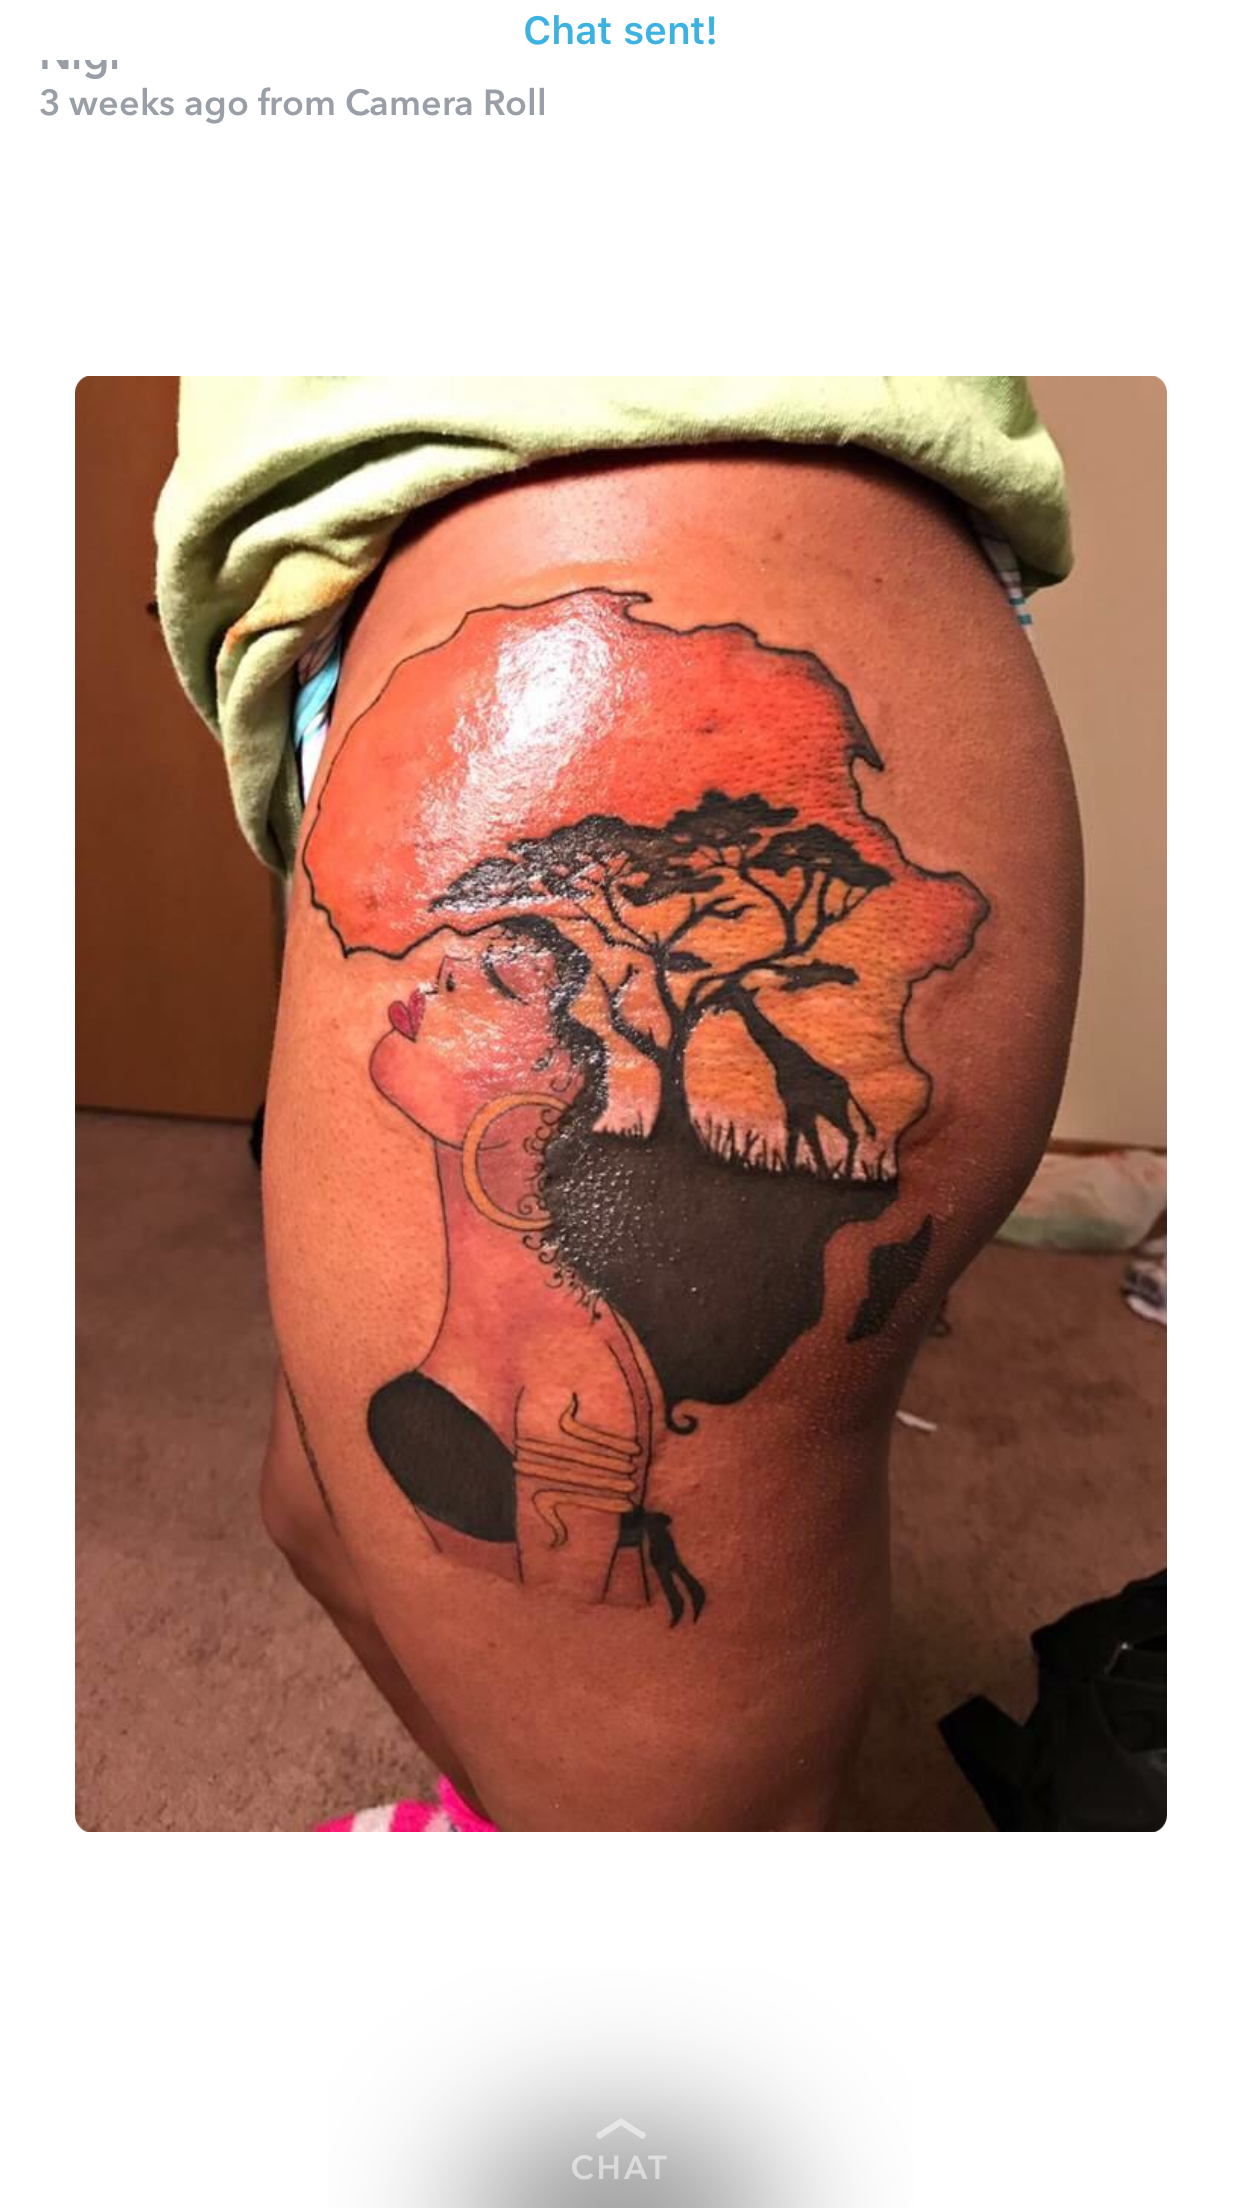 Black girl booty tattoos